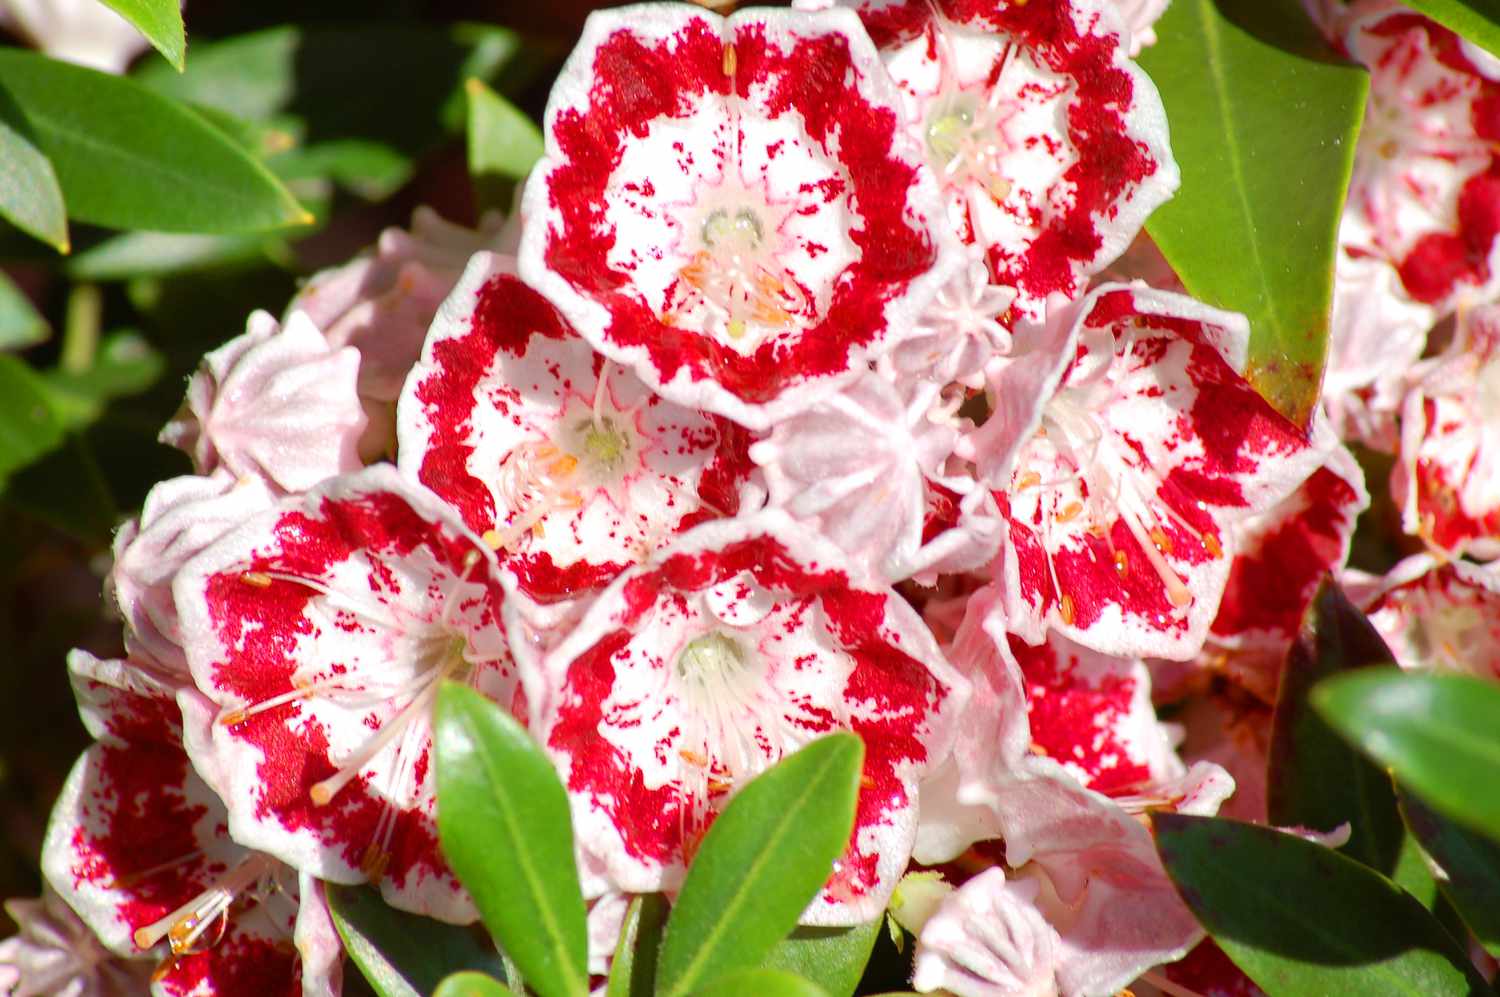 Minuet laurel has reddish-pink flowers.